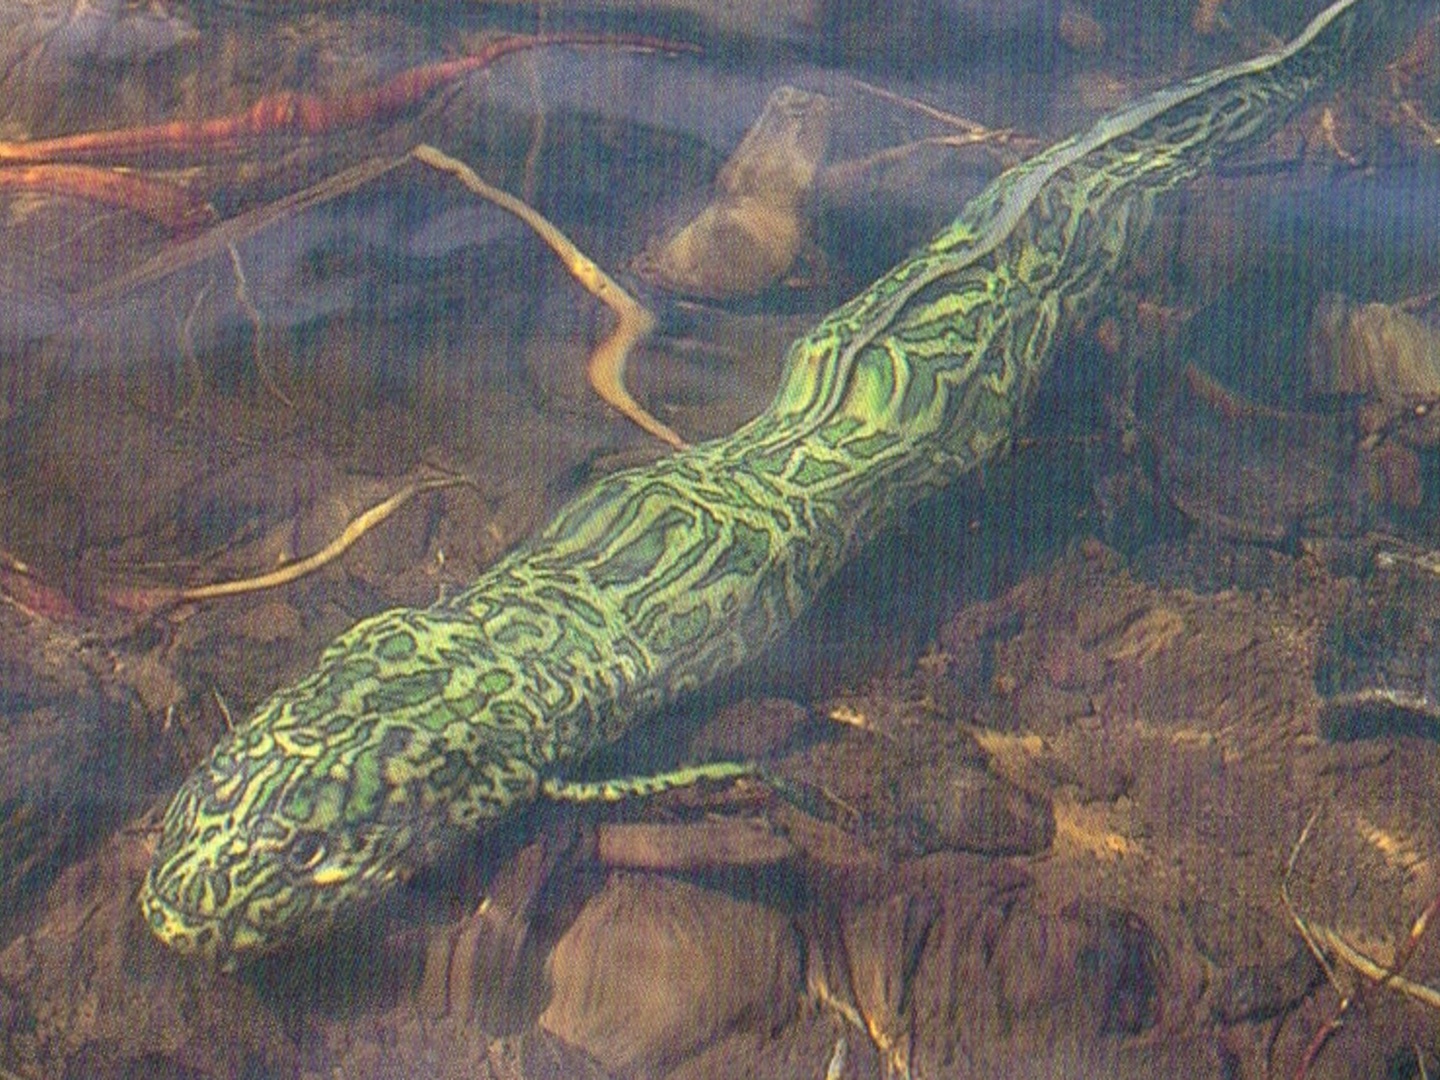 devonian lungfish